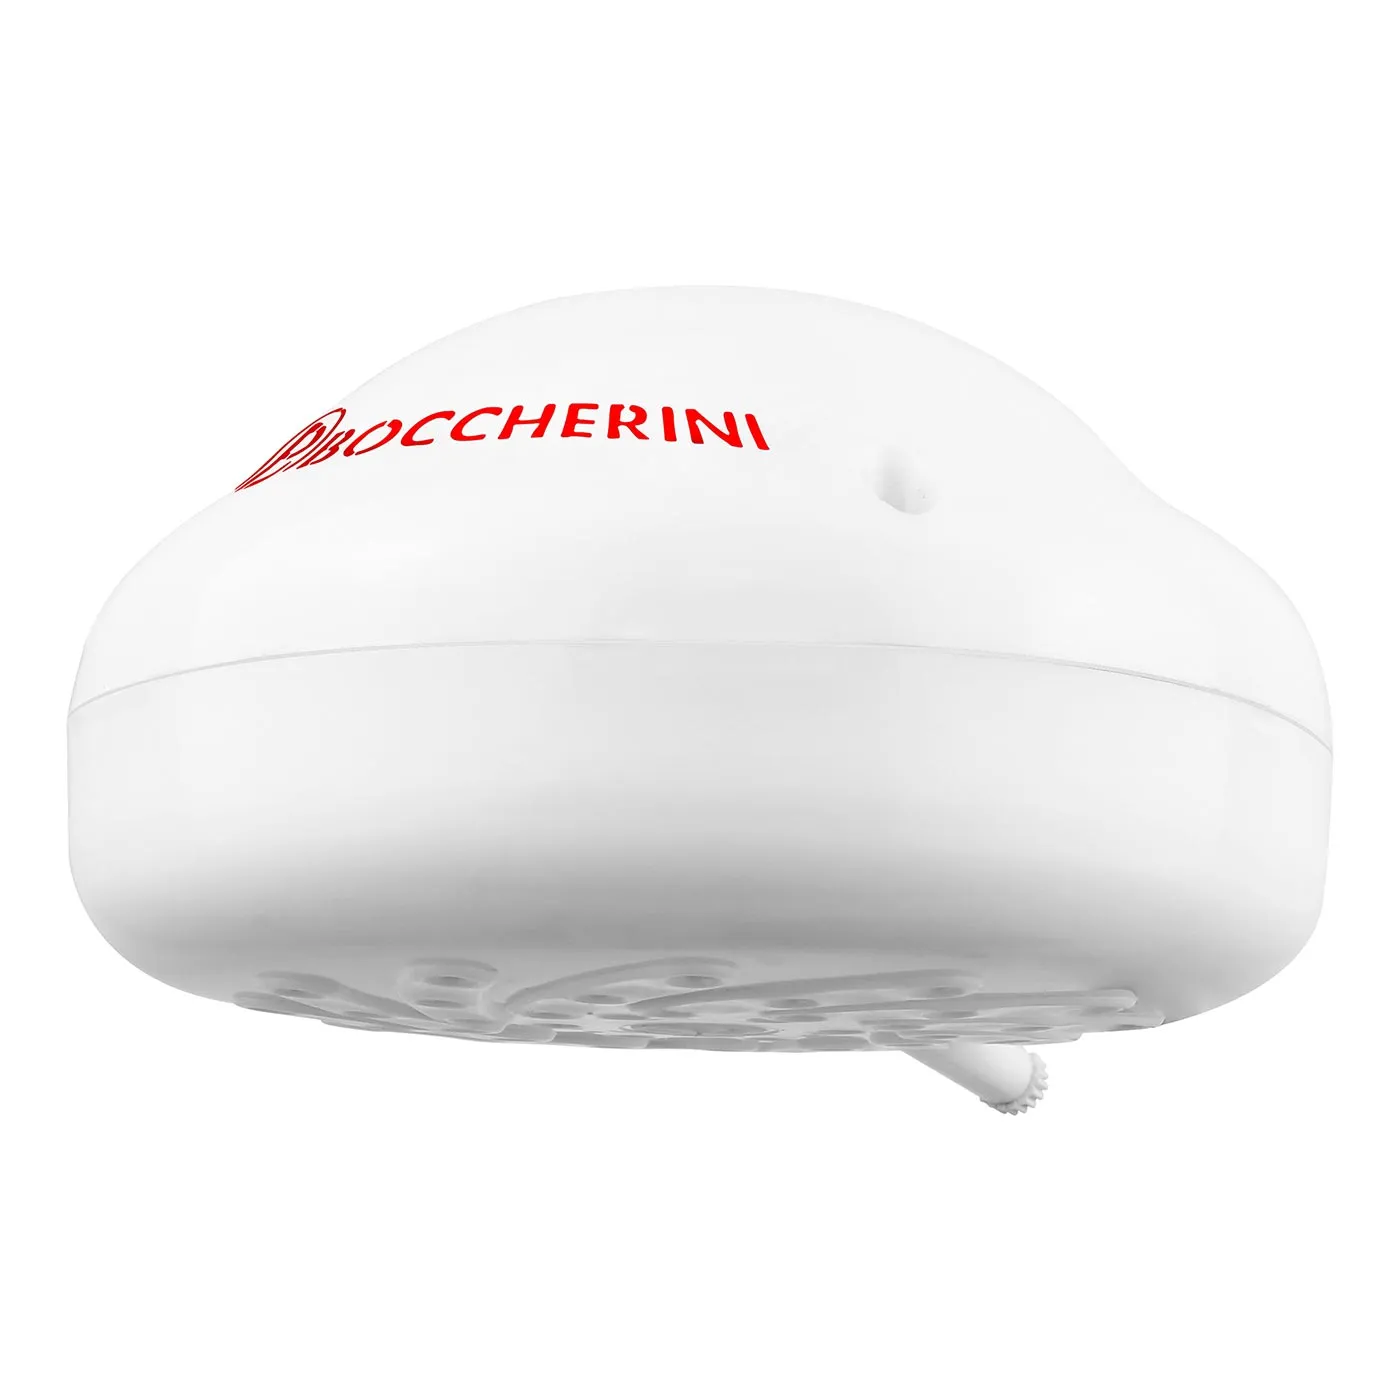 Ducha Electrica BOCCHERINI Premium Zent Blanca 120V con Manguera